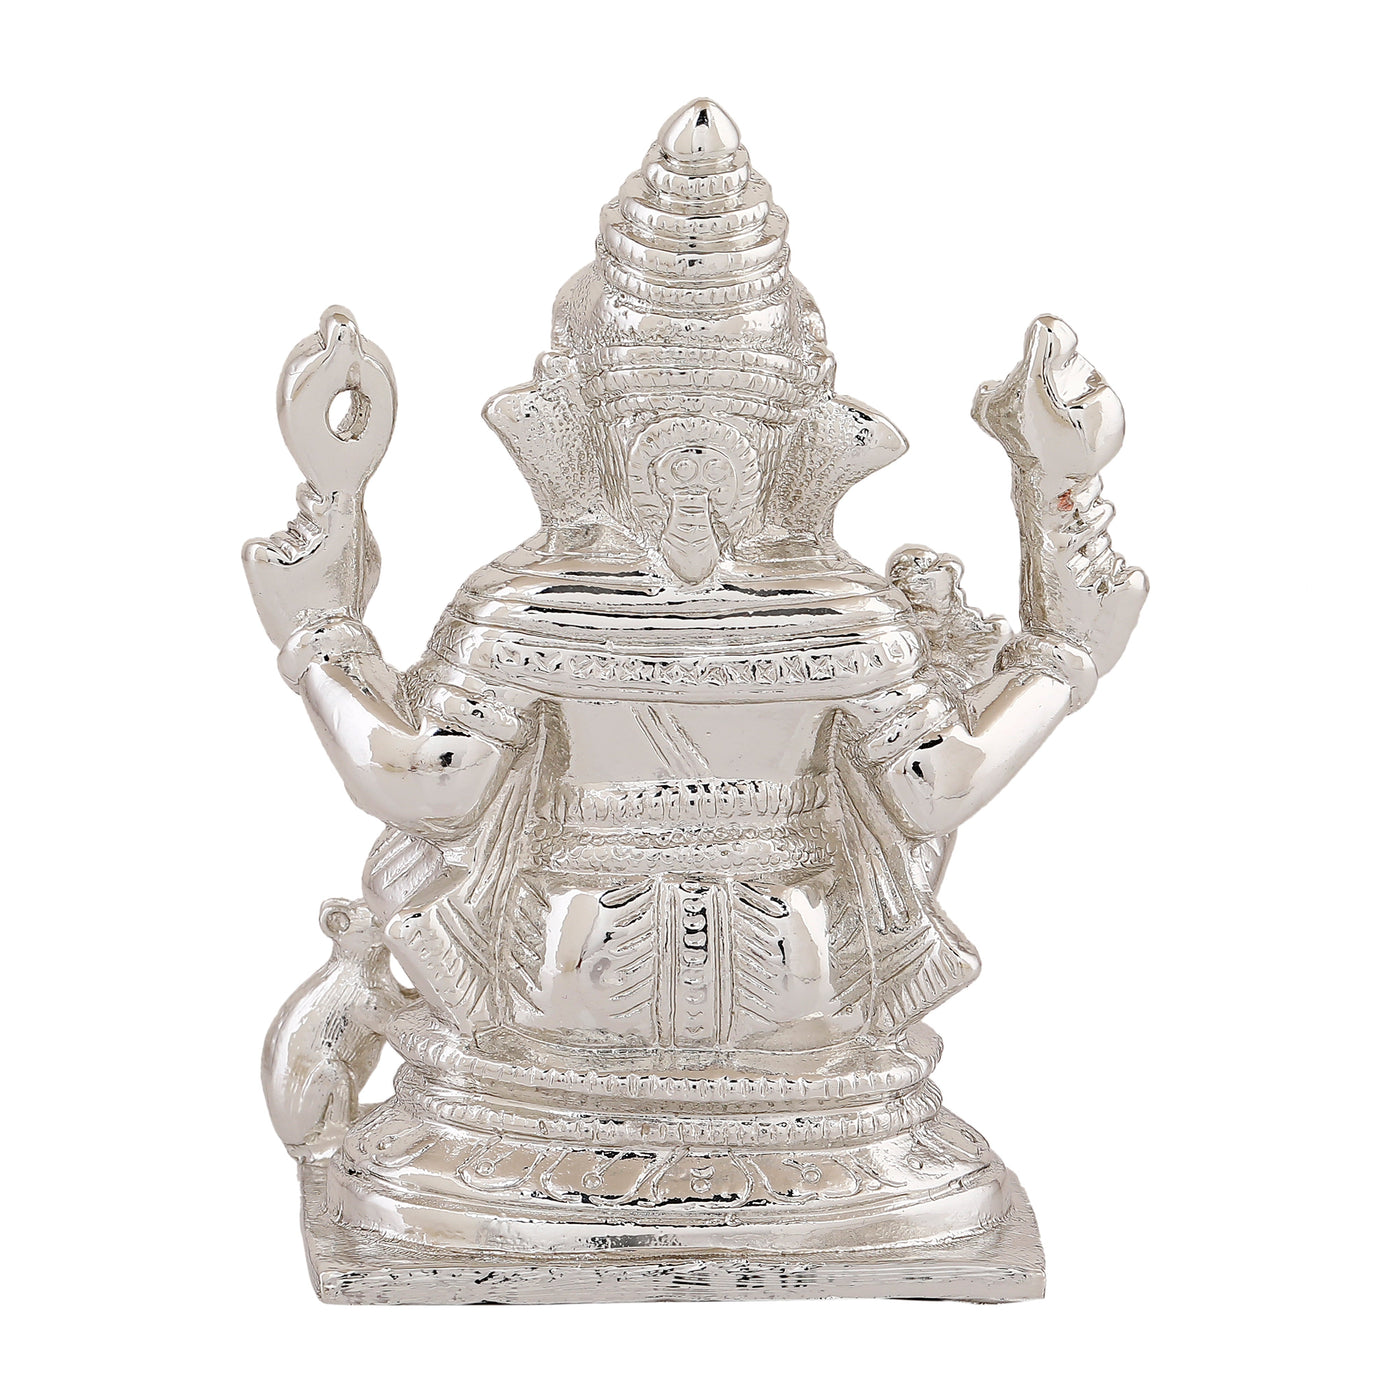 Estele Gold Plated Spiritual Ganesh Idol